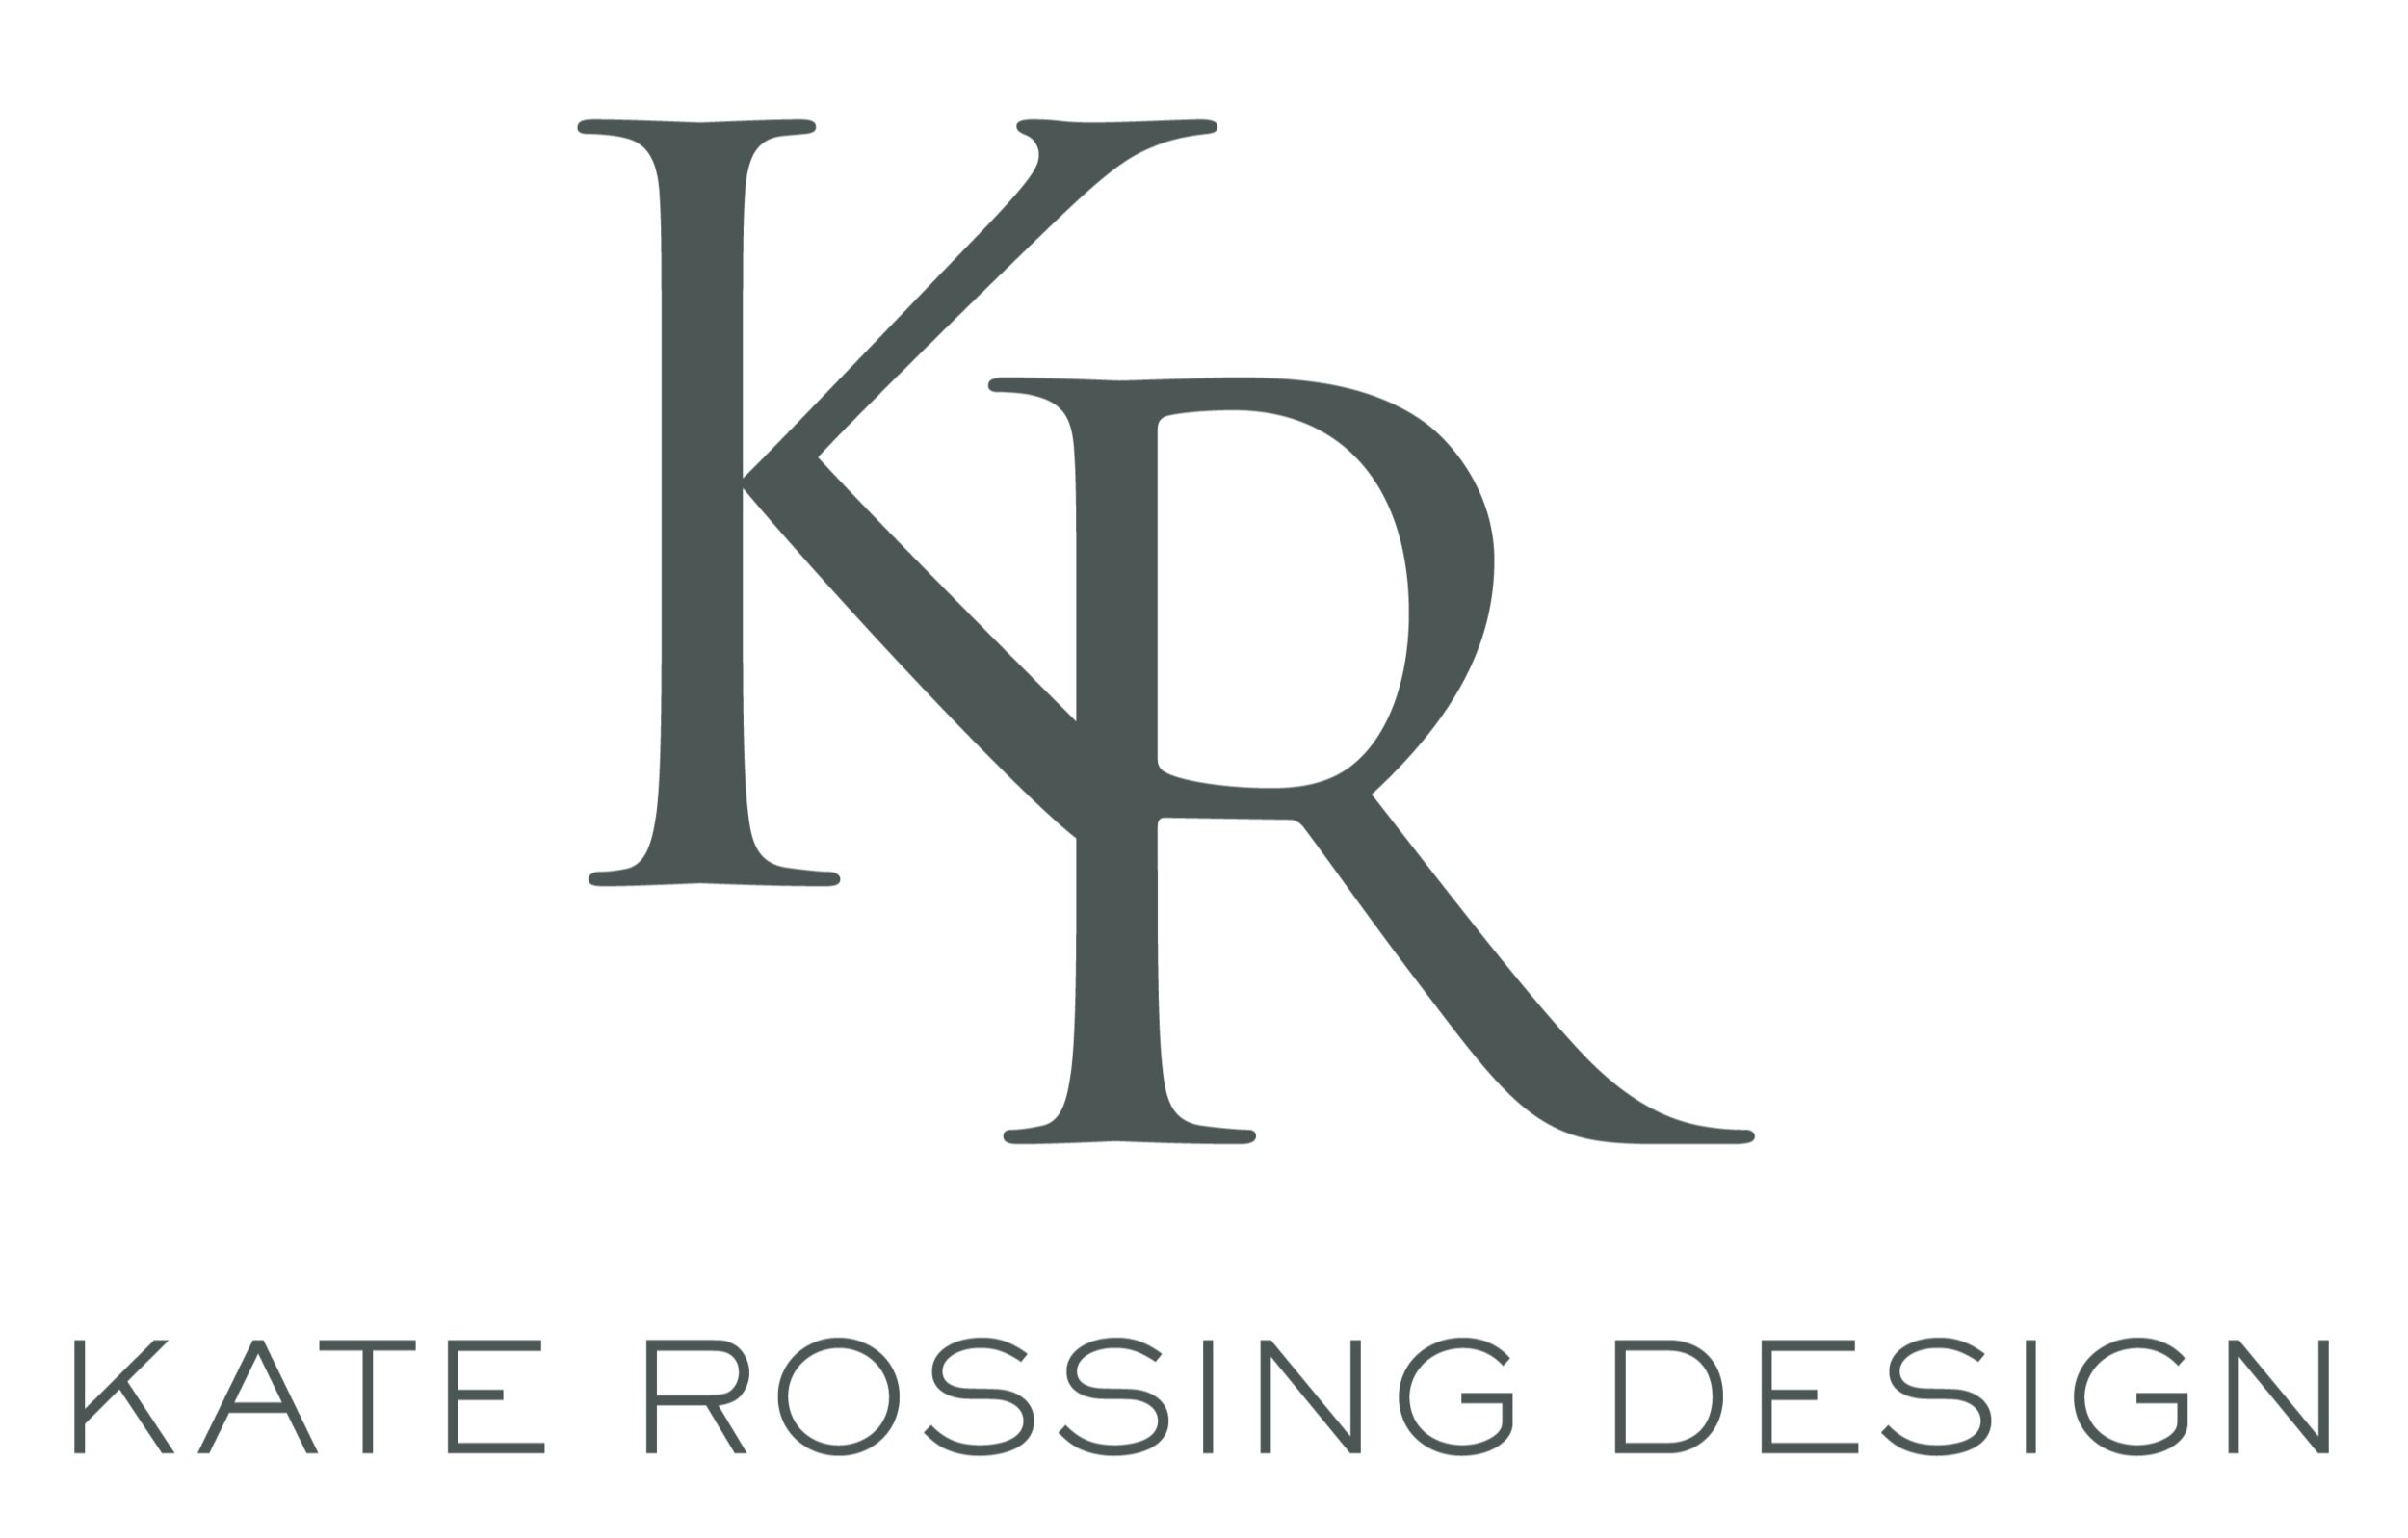 Kate Rossing Design